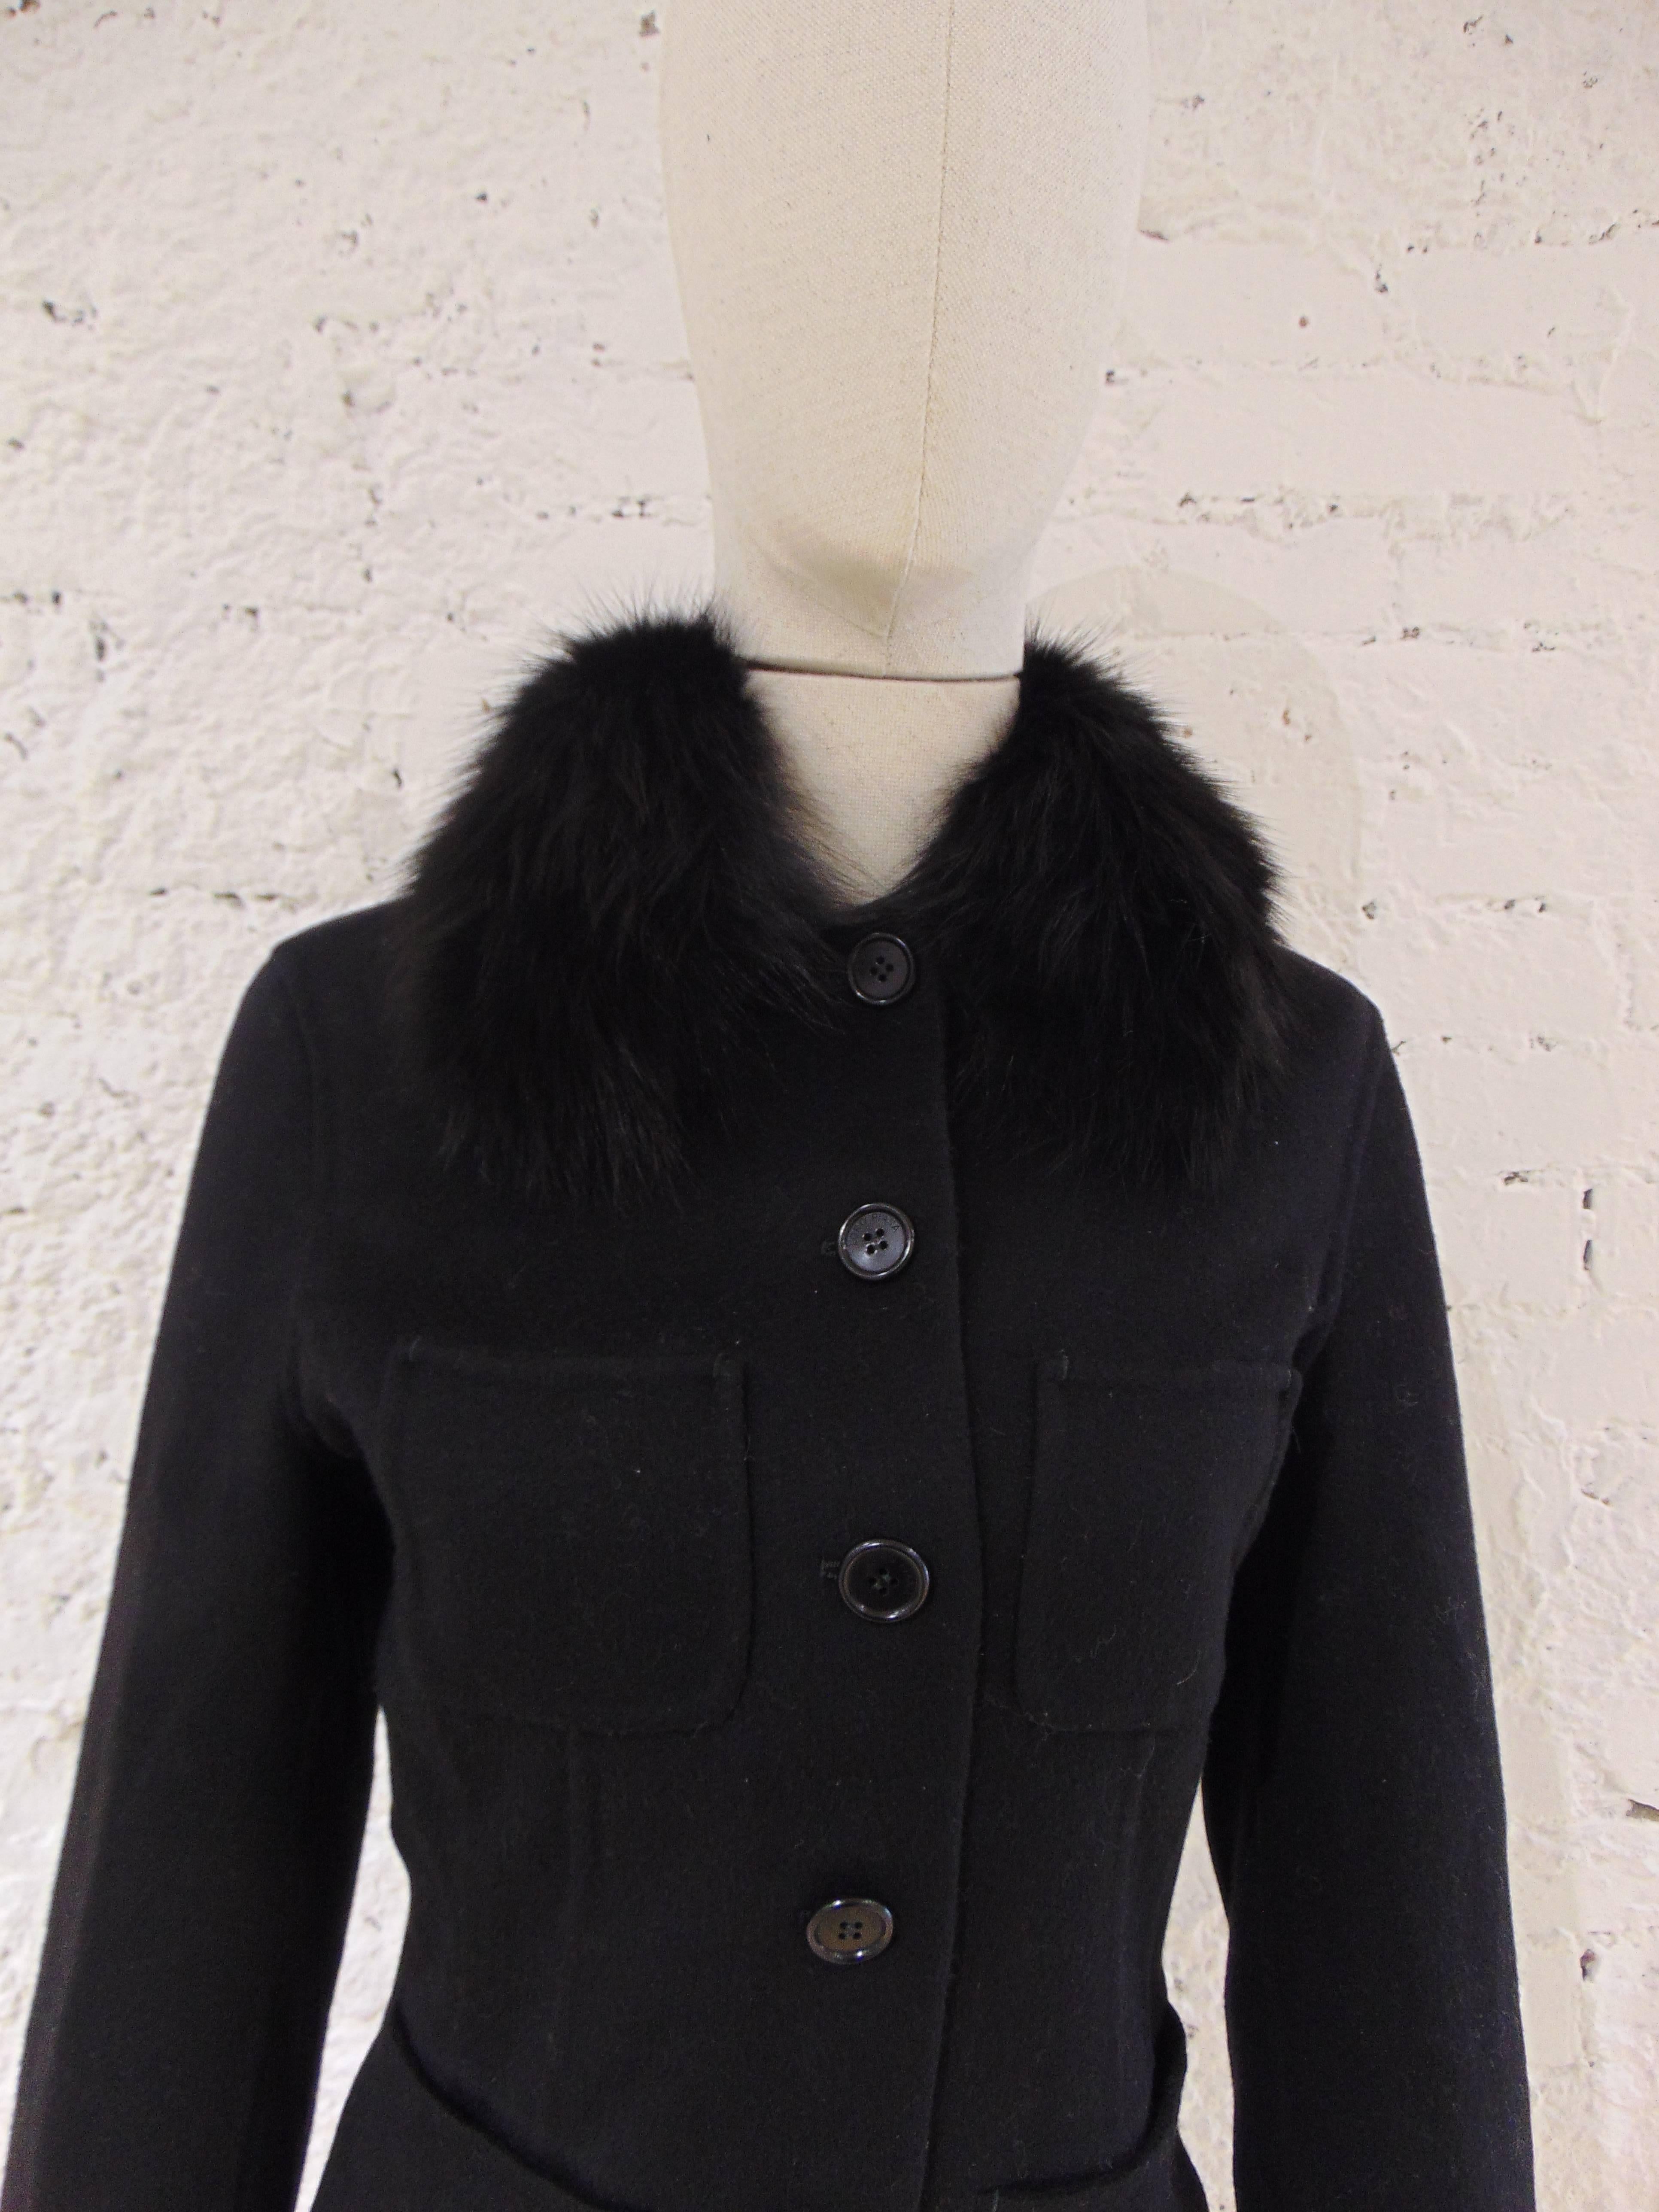 Loro Piana black wool cachemire fox fur Jacket

Loro Piana black jacket totally made in italy with real puter collar shadow fox fur

Size 44

